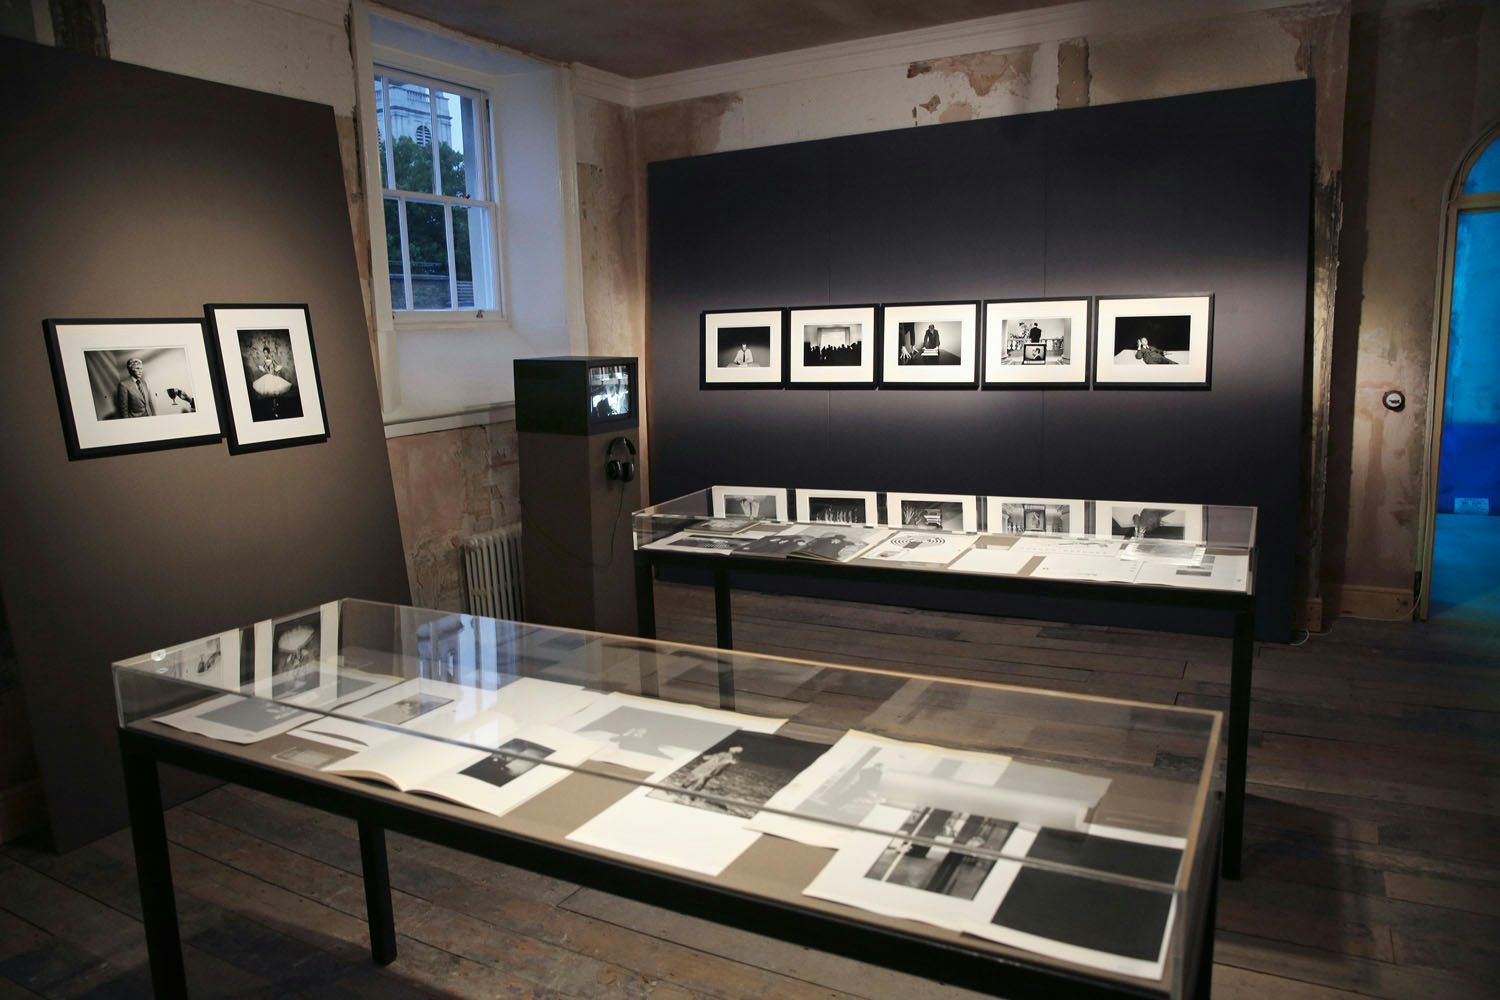 Burberry's photography exhibition explores British ways of life